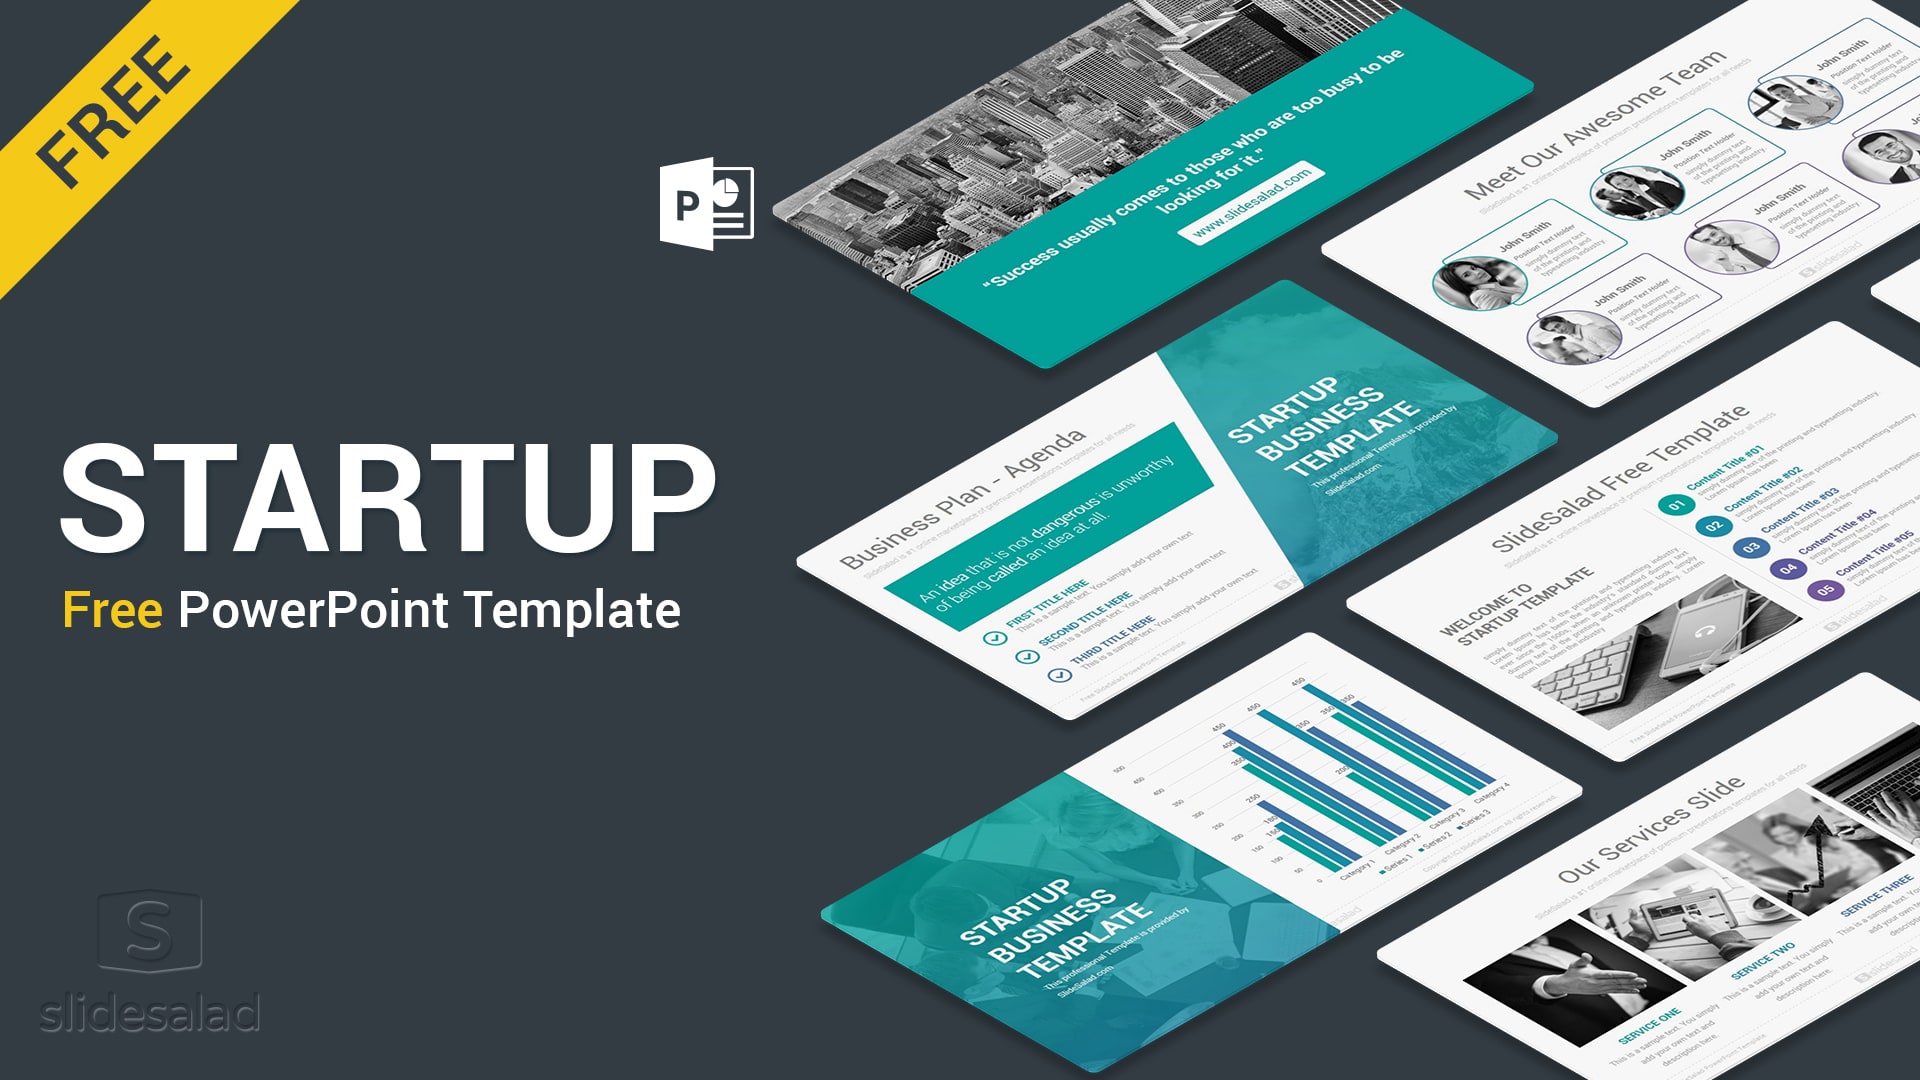 Startup Free PowerPoint Presentation Template - SlideSalad